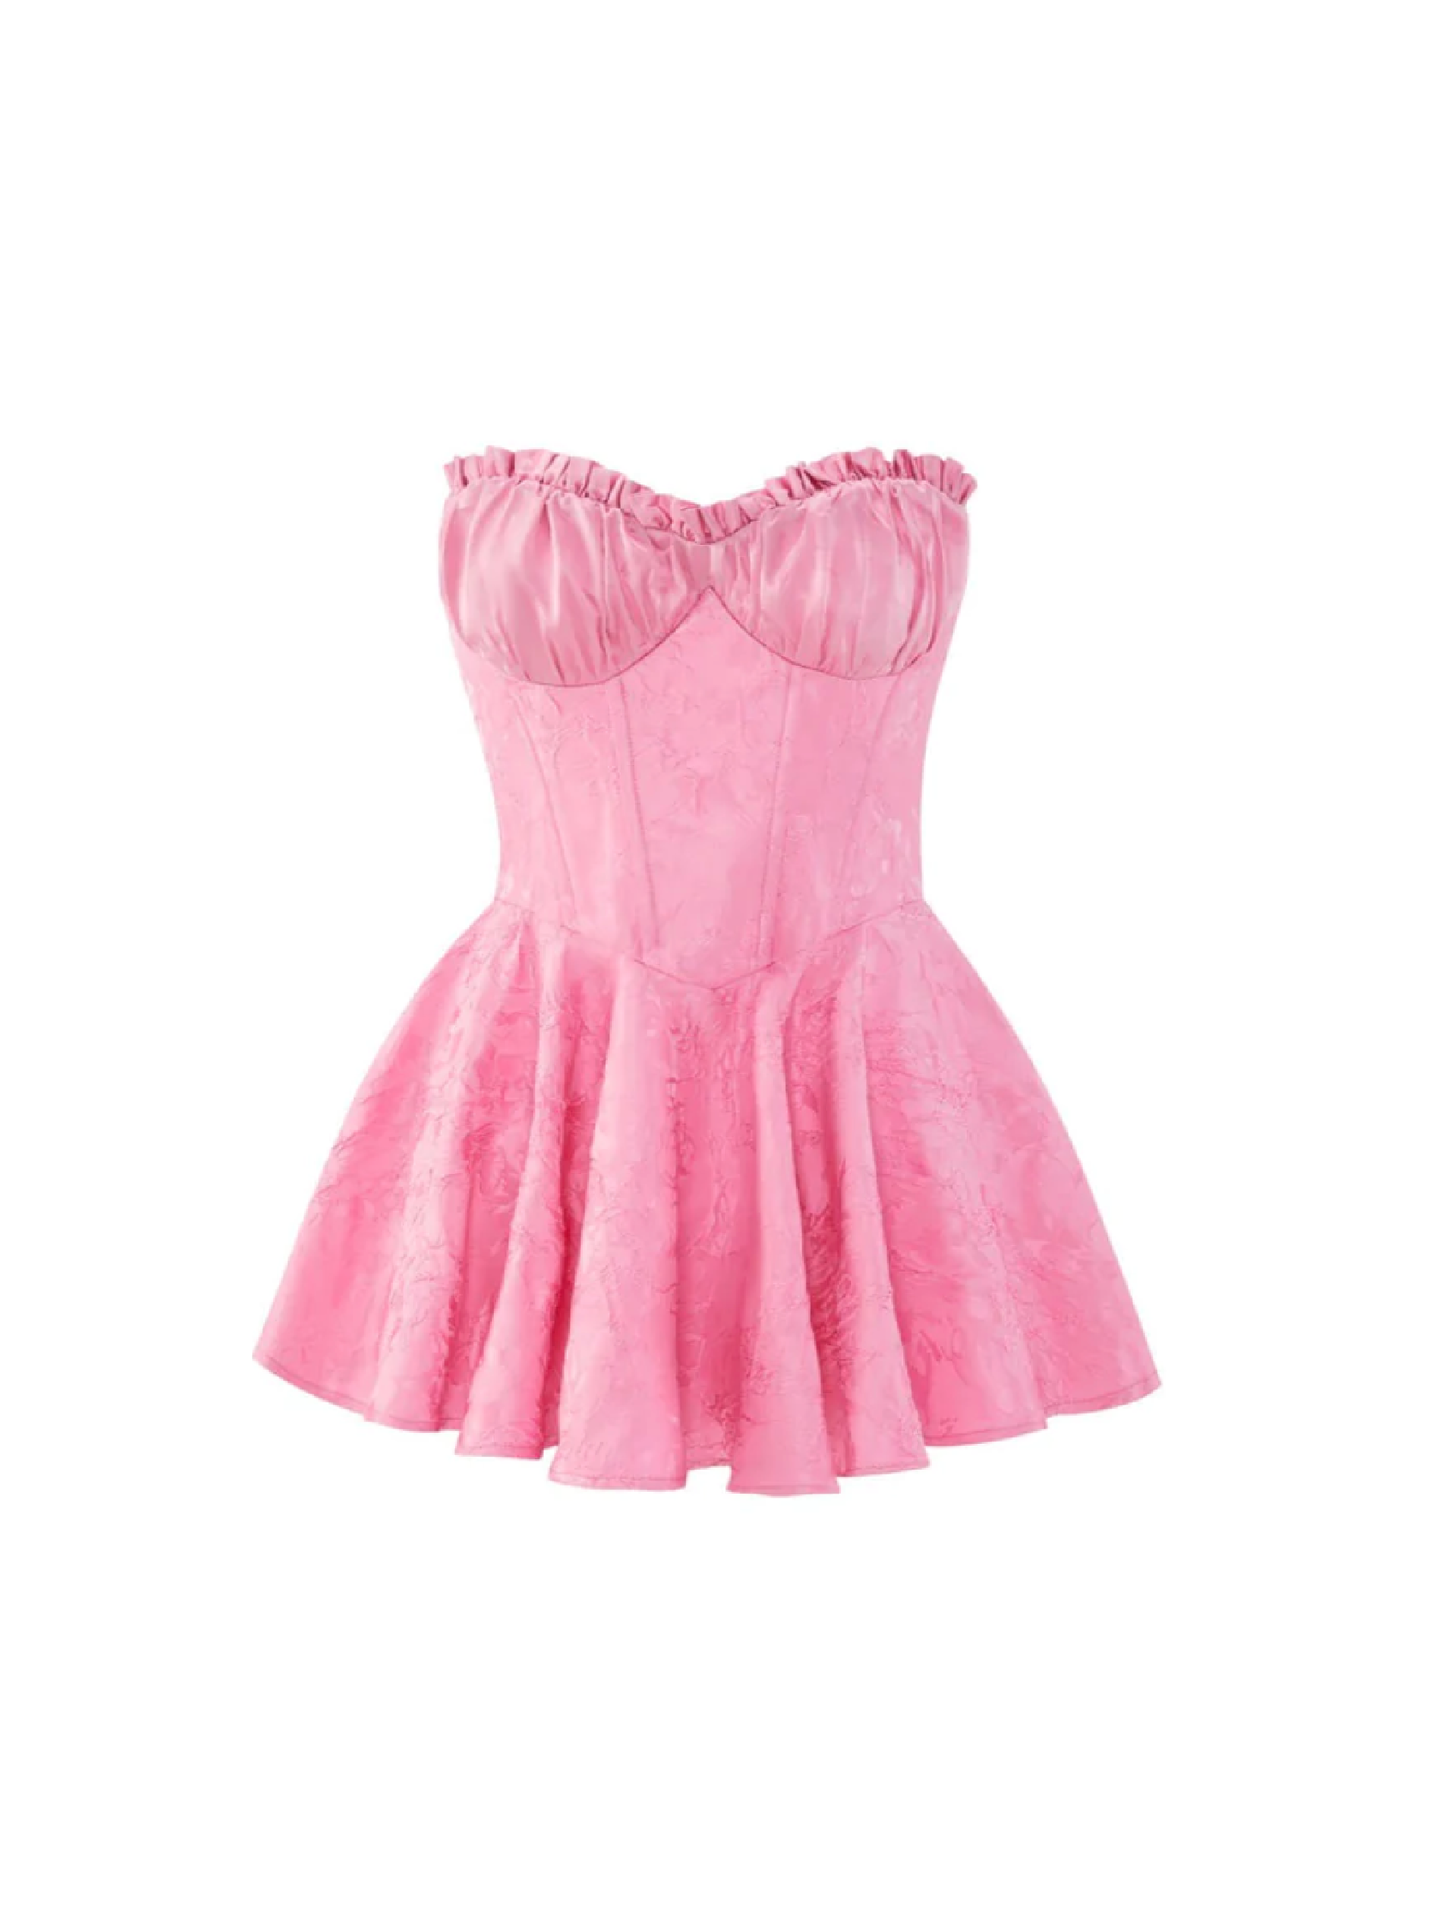 Airina Dress (Pink)